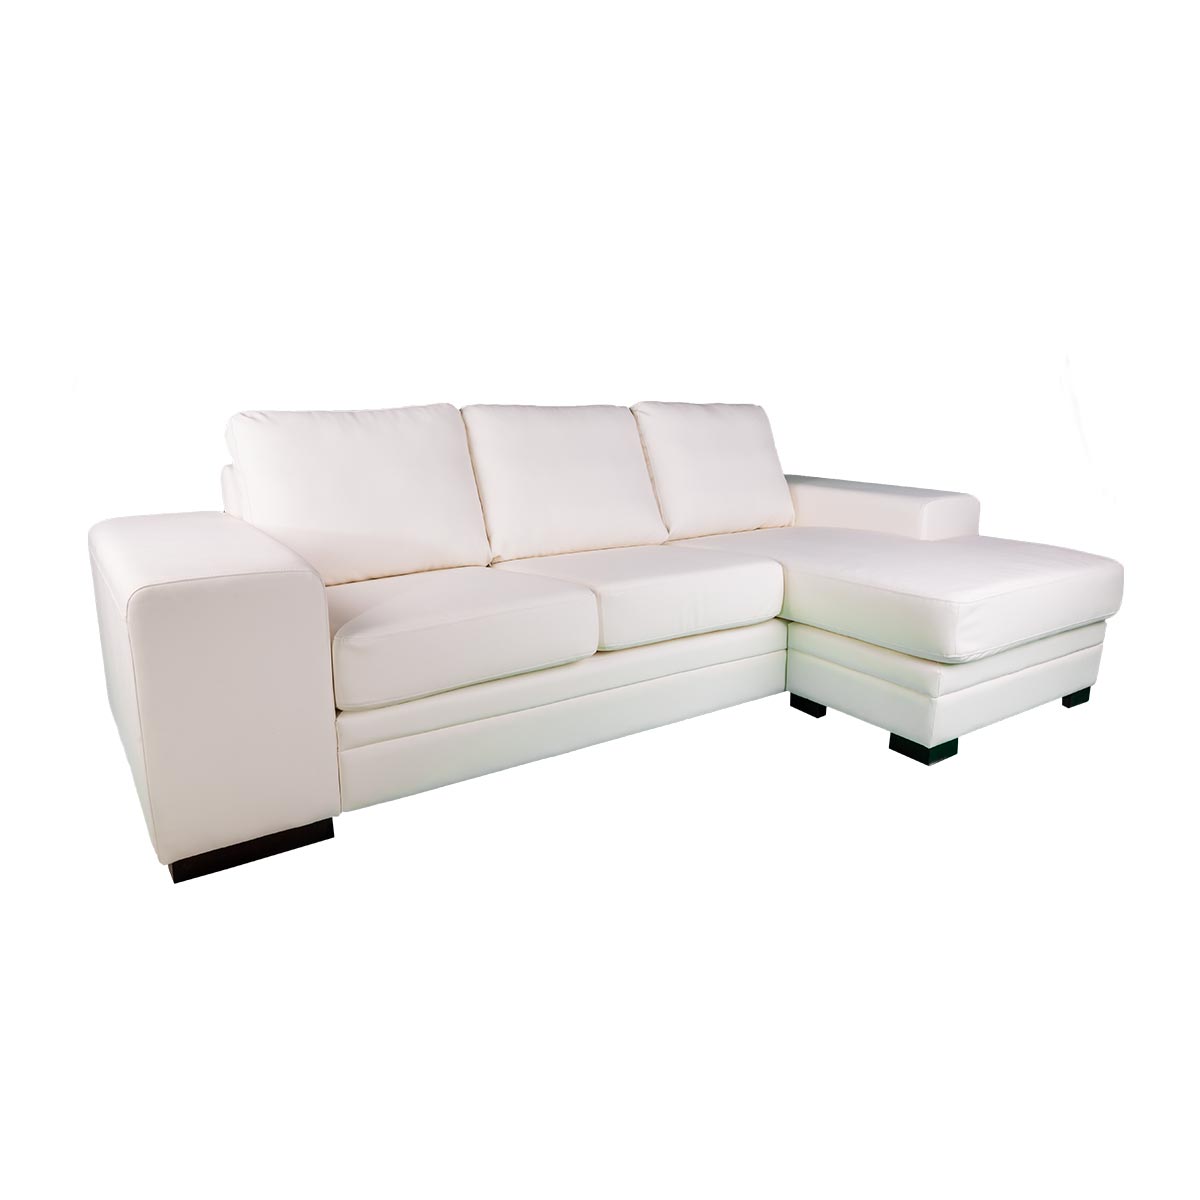 sofe-4017-knok-3-seating-poef